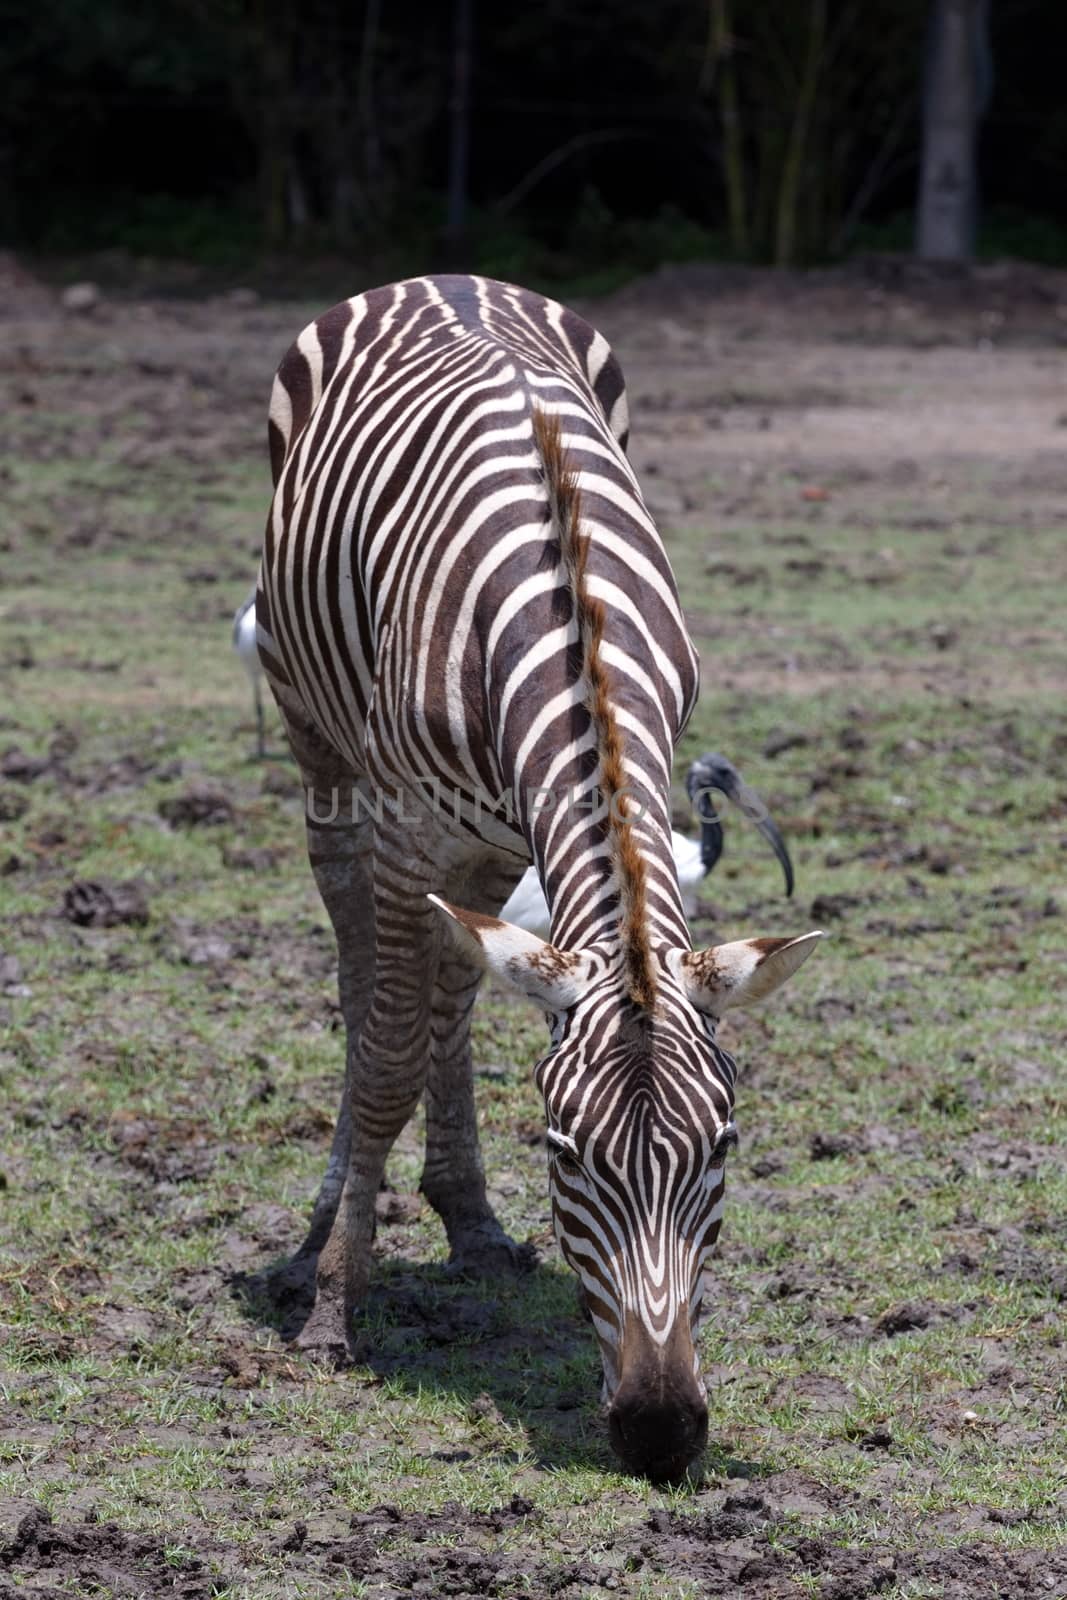 A zebra eating grass in the daytime. by joker3753